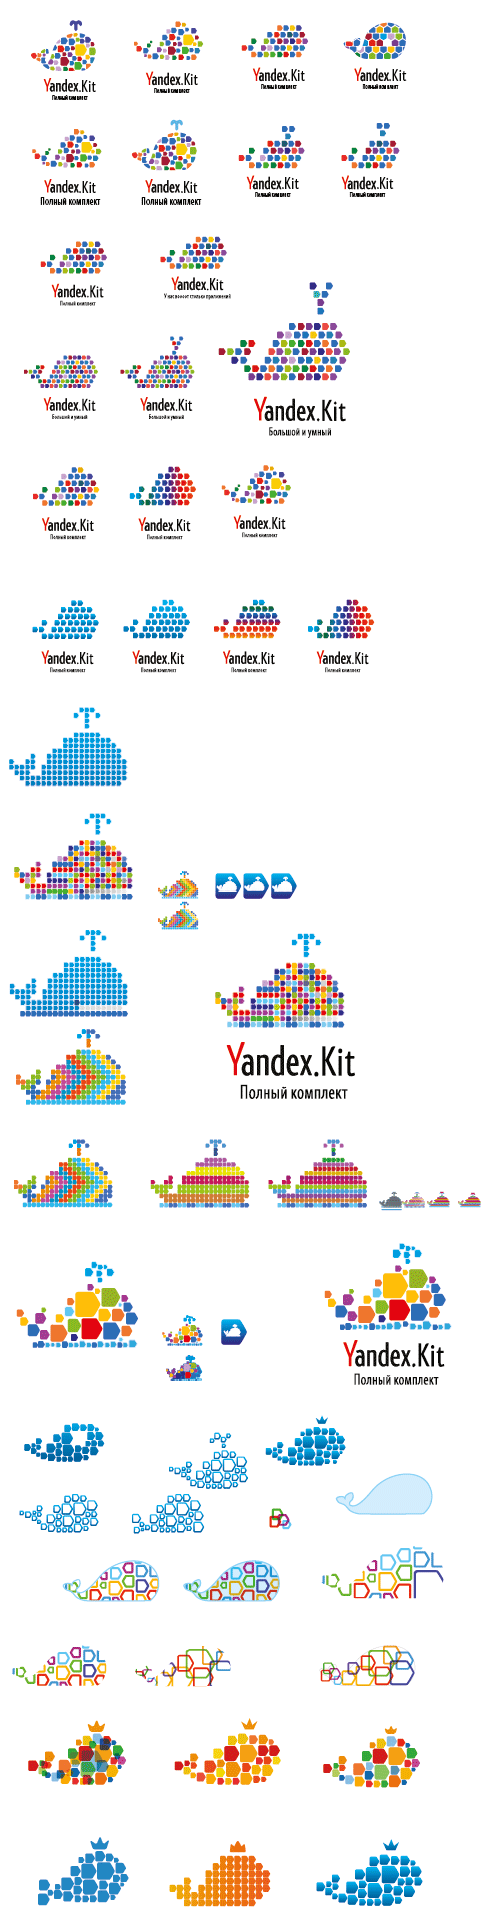 yandex kit process 03